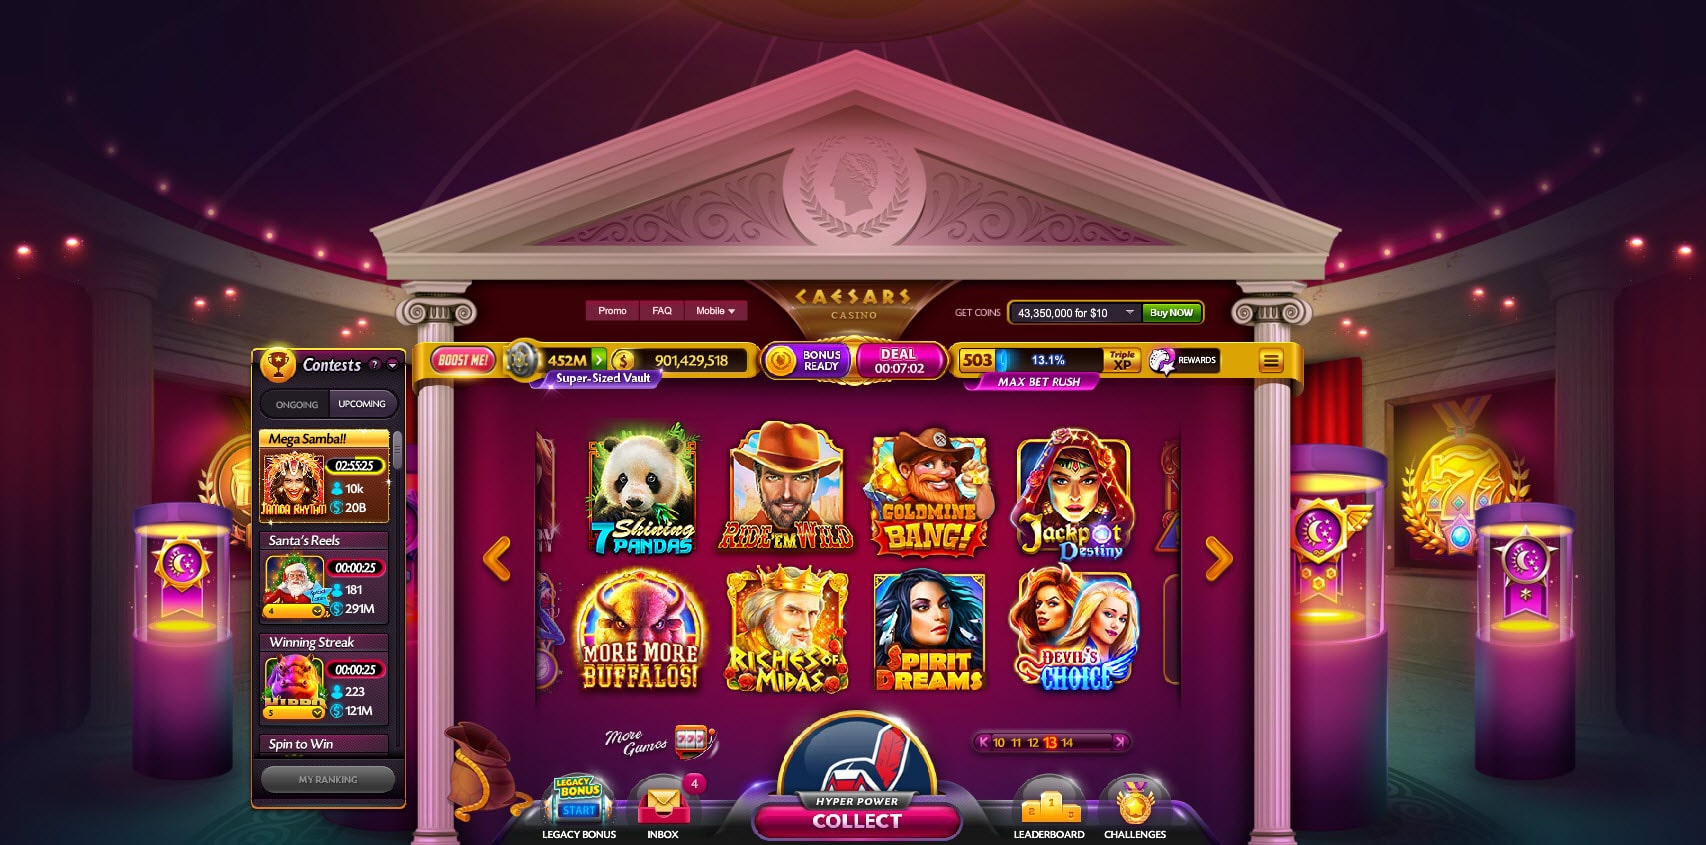 Caesars Slots - Casino Slots Games instal the last version for iphone